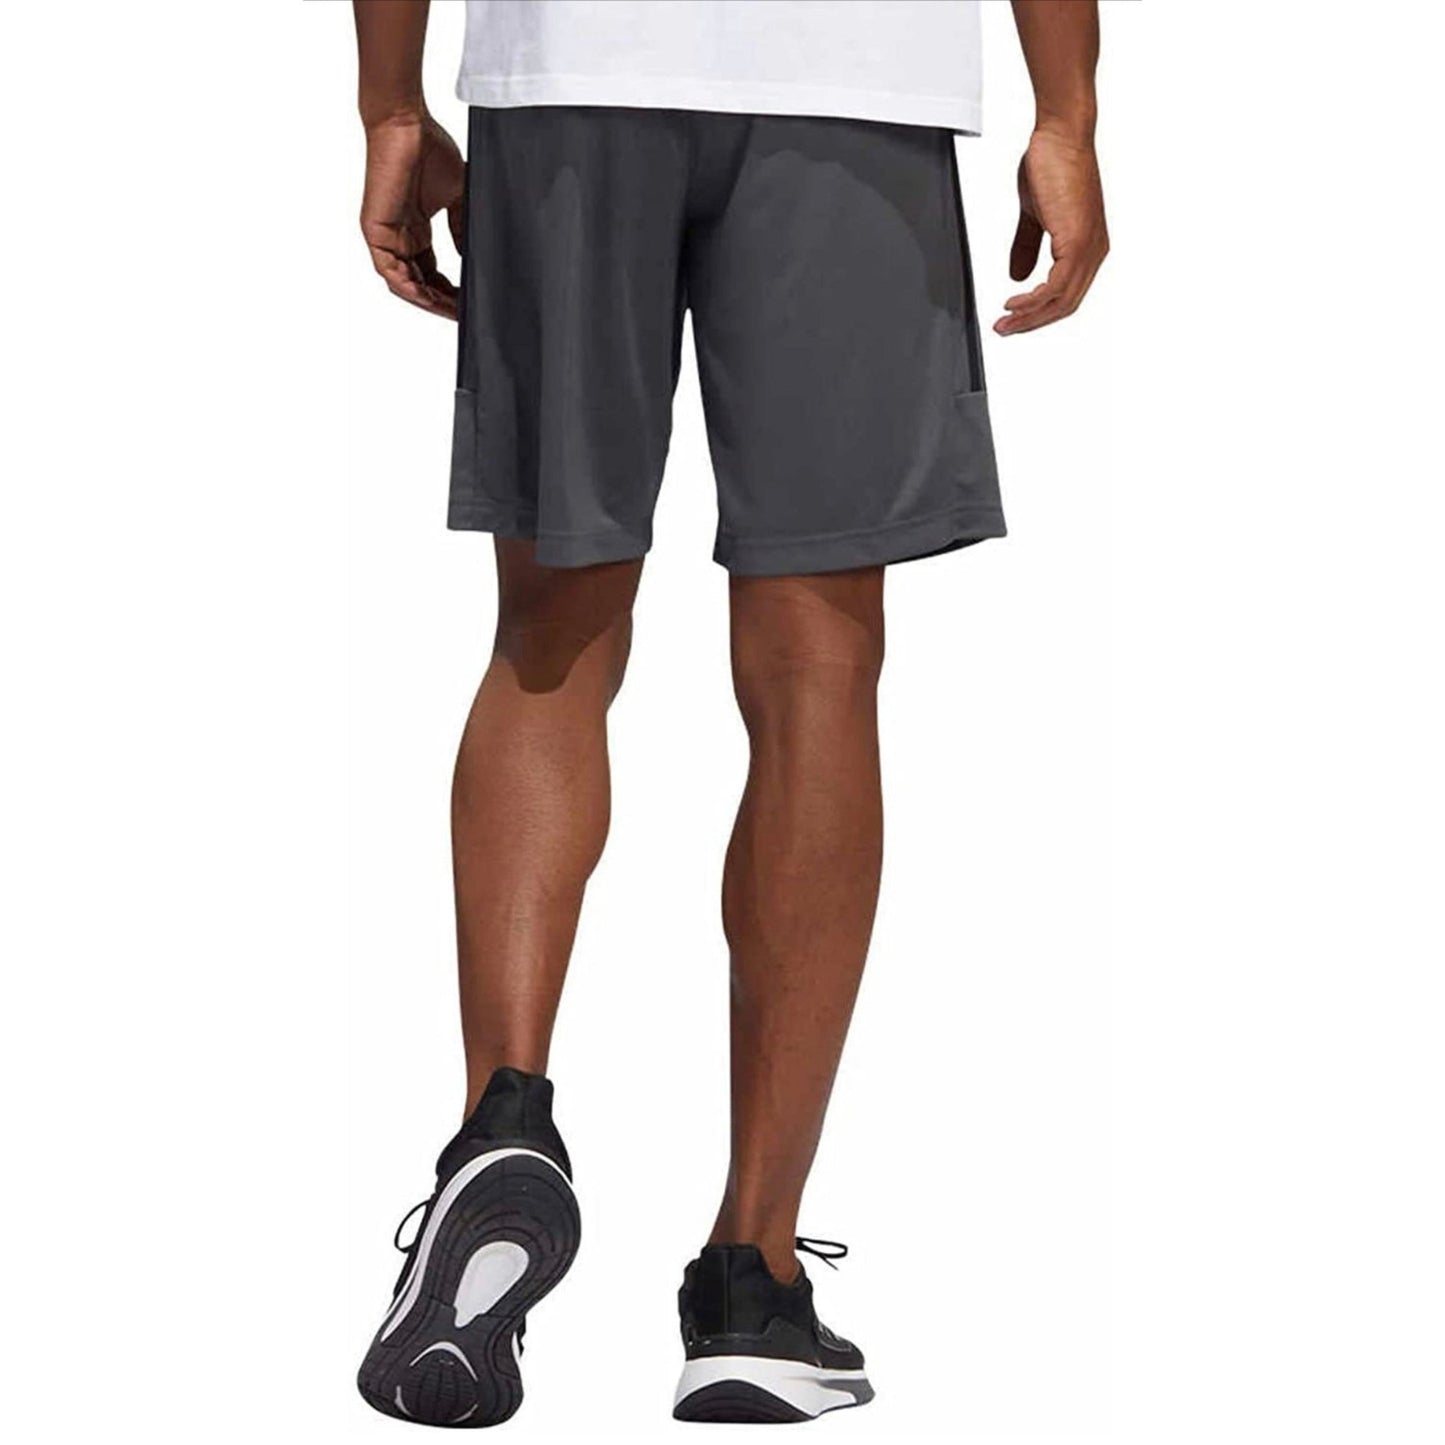 adidas-adidas Men's Short - 3 Stripe with Zipper Pockets (Gray/Black) - Brandat Outlet